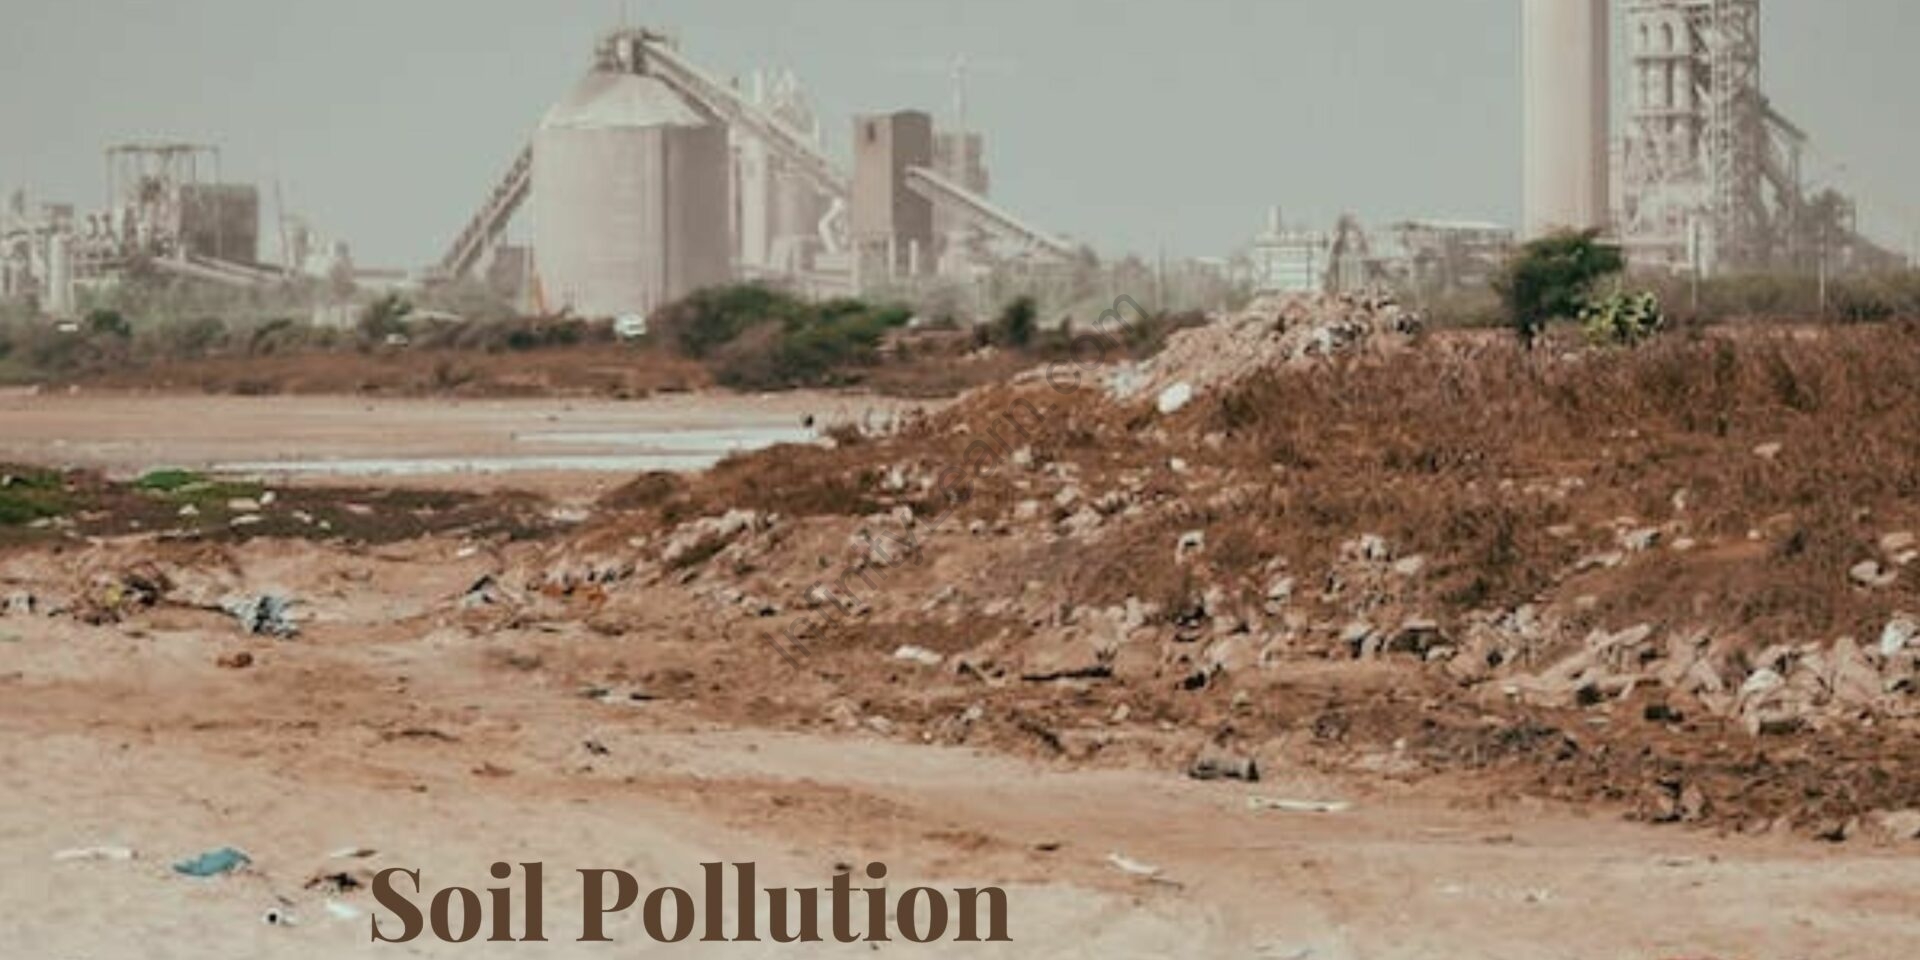 short speech on soil pollution